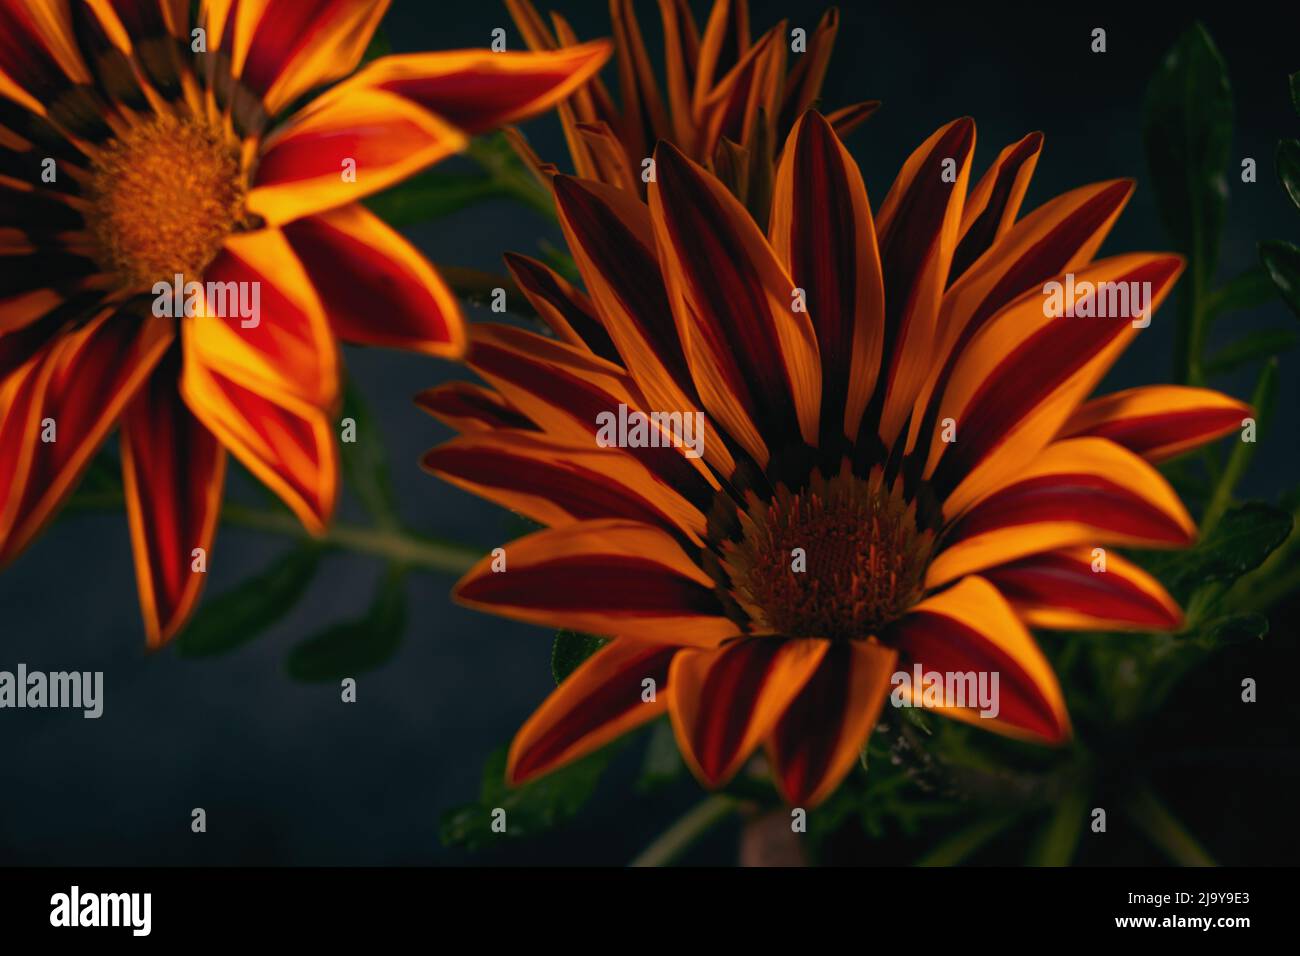 Closeup photo of orange flowers Gazania Harsh with black background Stock Photo